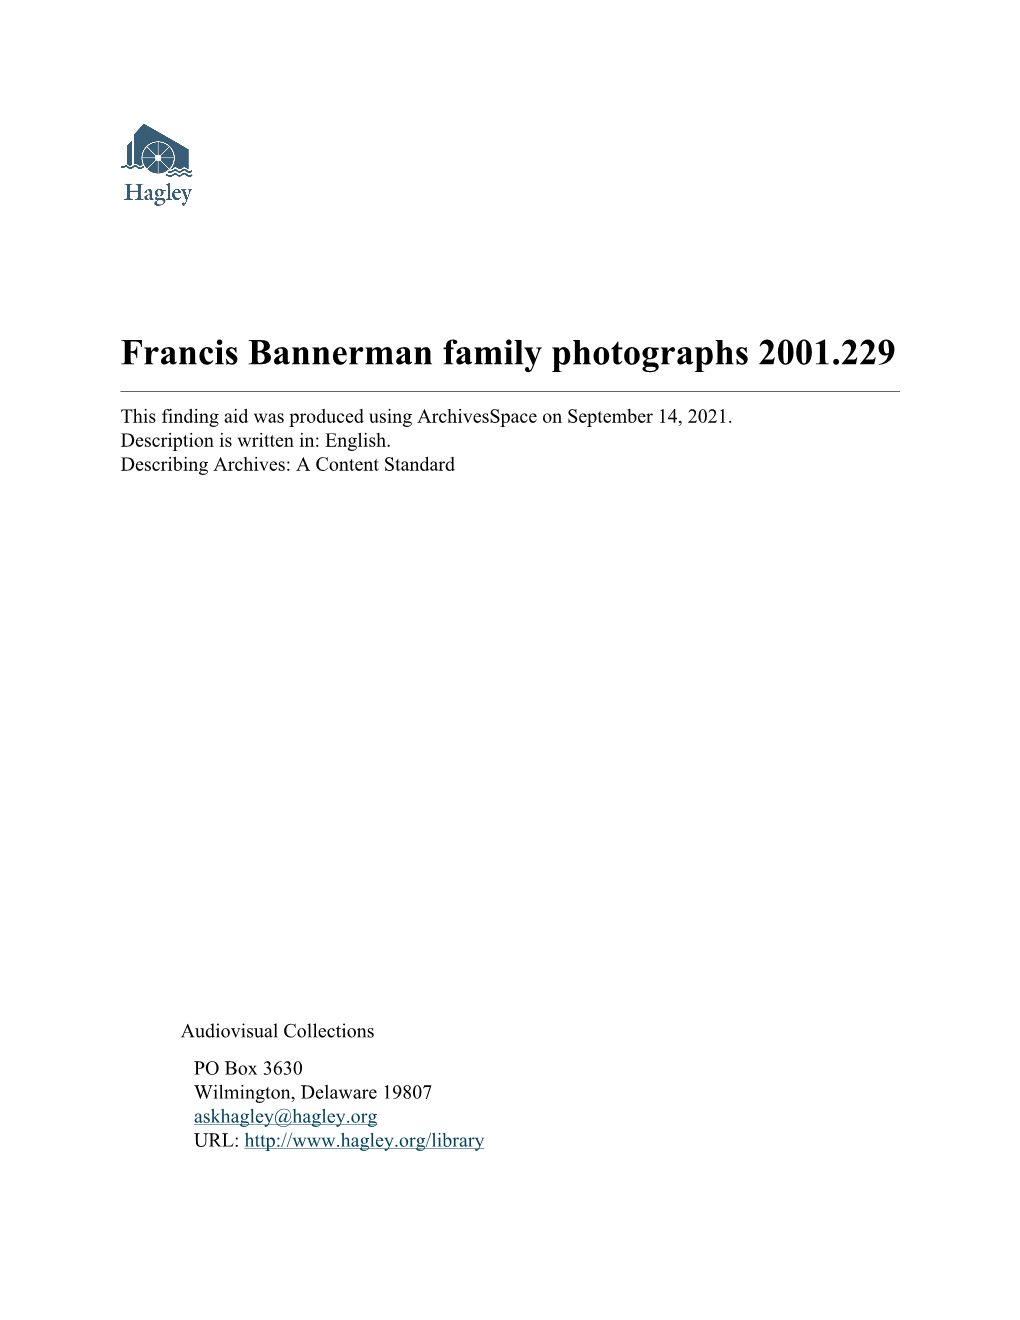 Francis Bannerman Family Photographs 2001.229